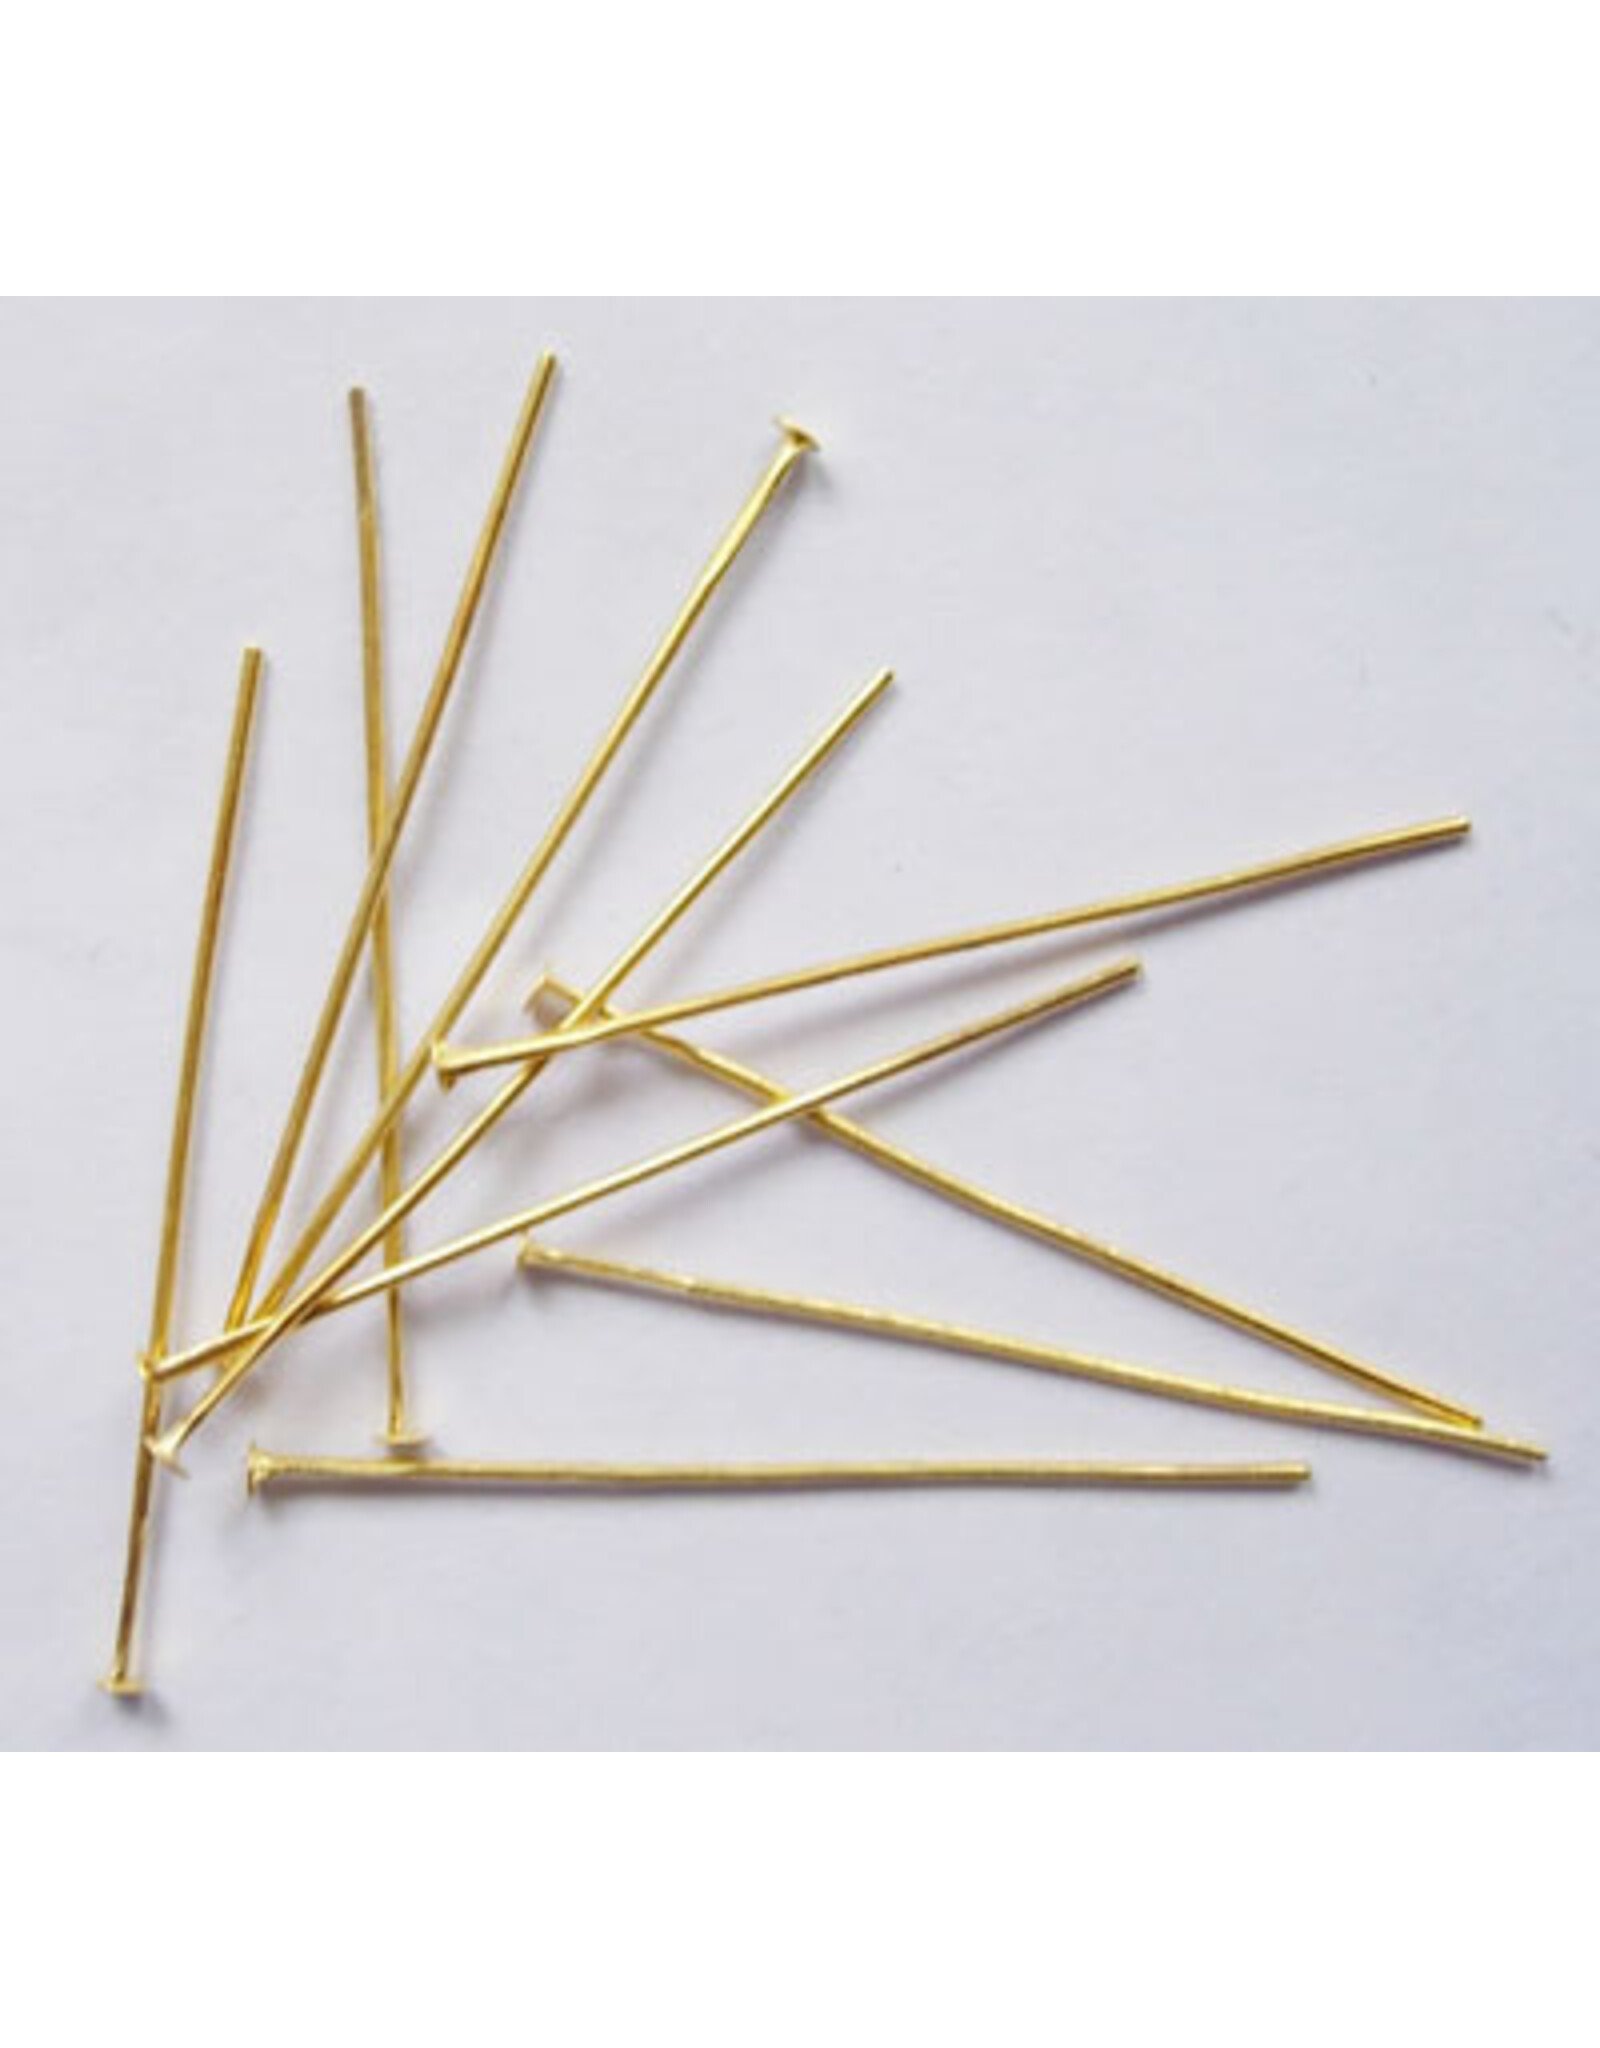 Headpins 2” 21g  Gold   x100   NF